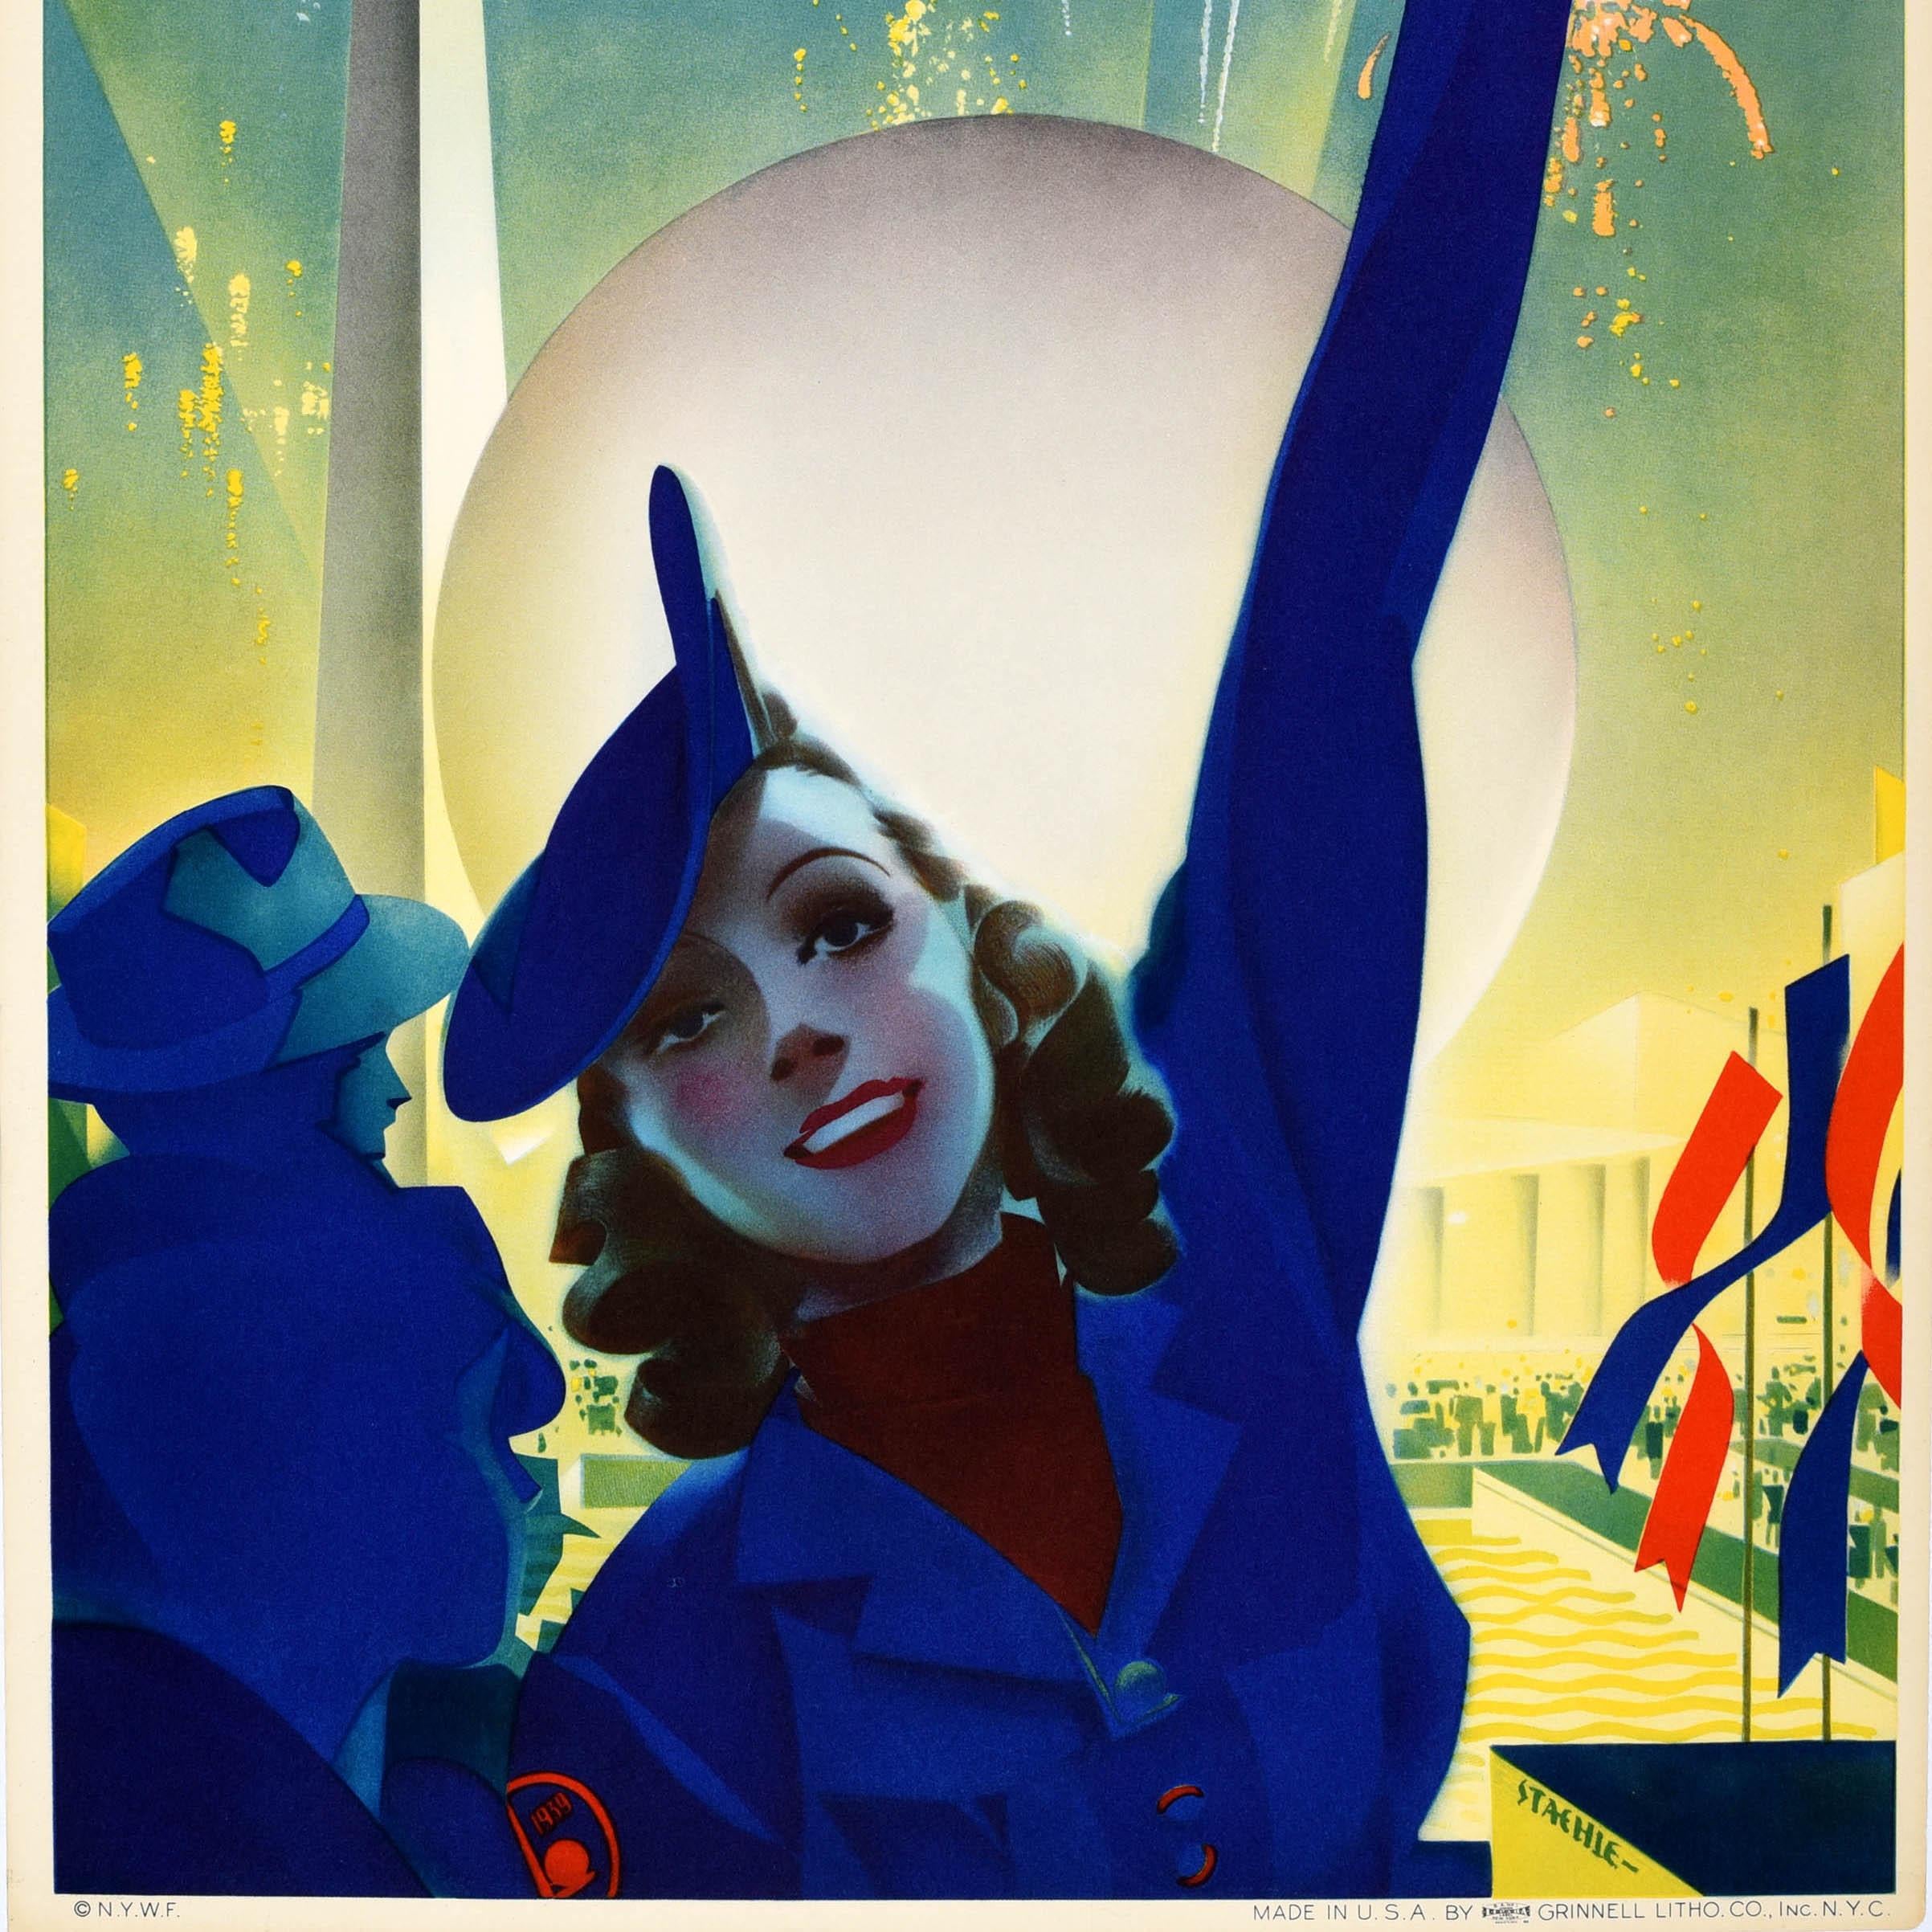 Original Vintage Poster New York World Fair 1939 Fireworks Art Deco Staehle USA - Blue Print by Albert Staehle